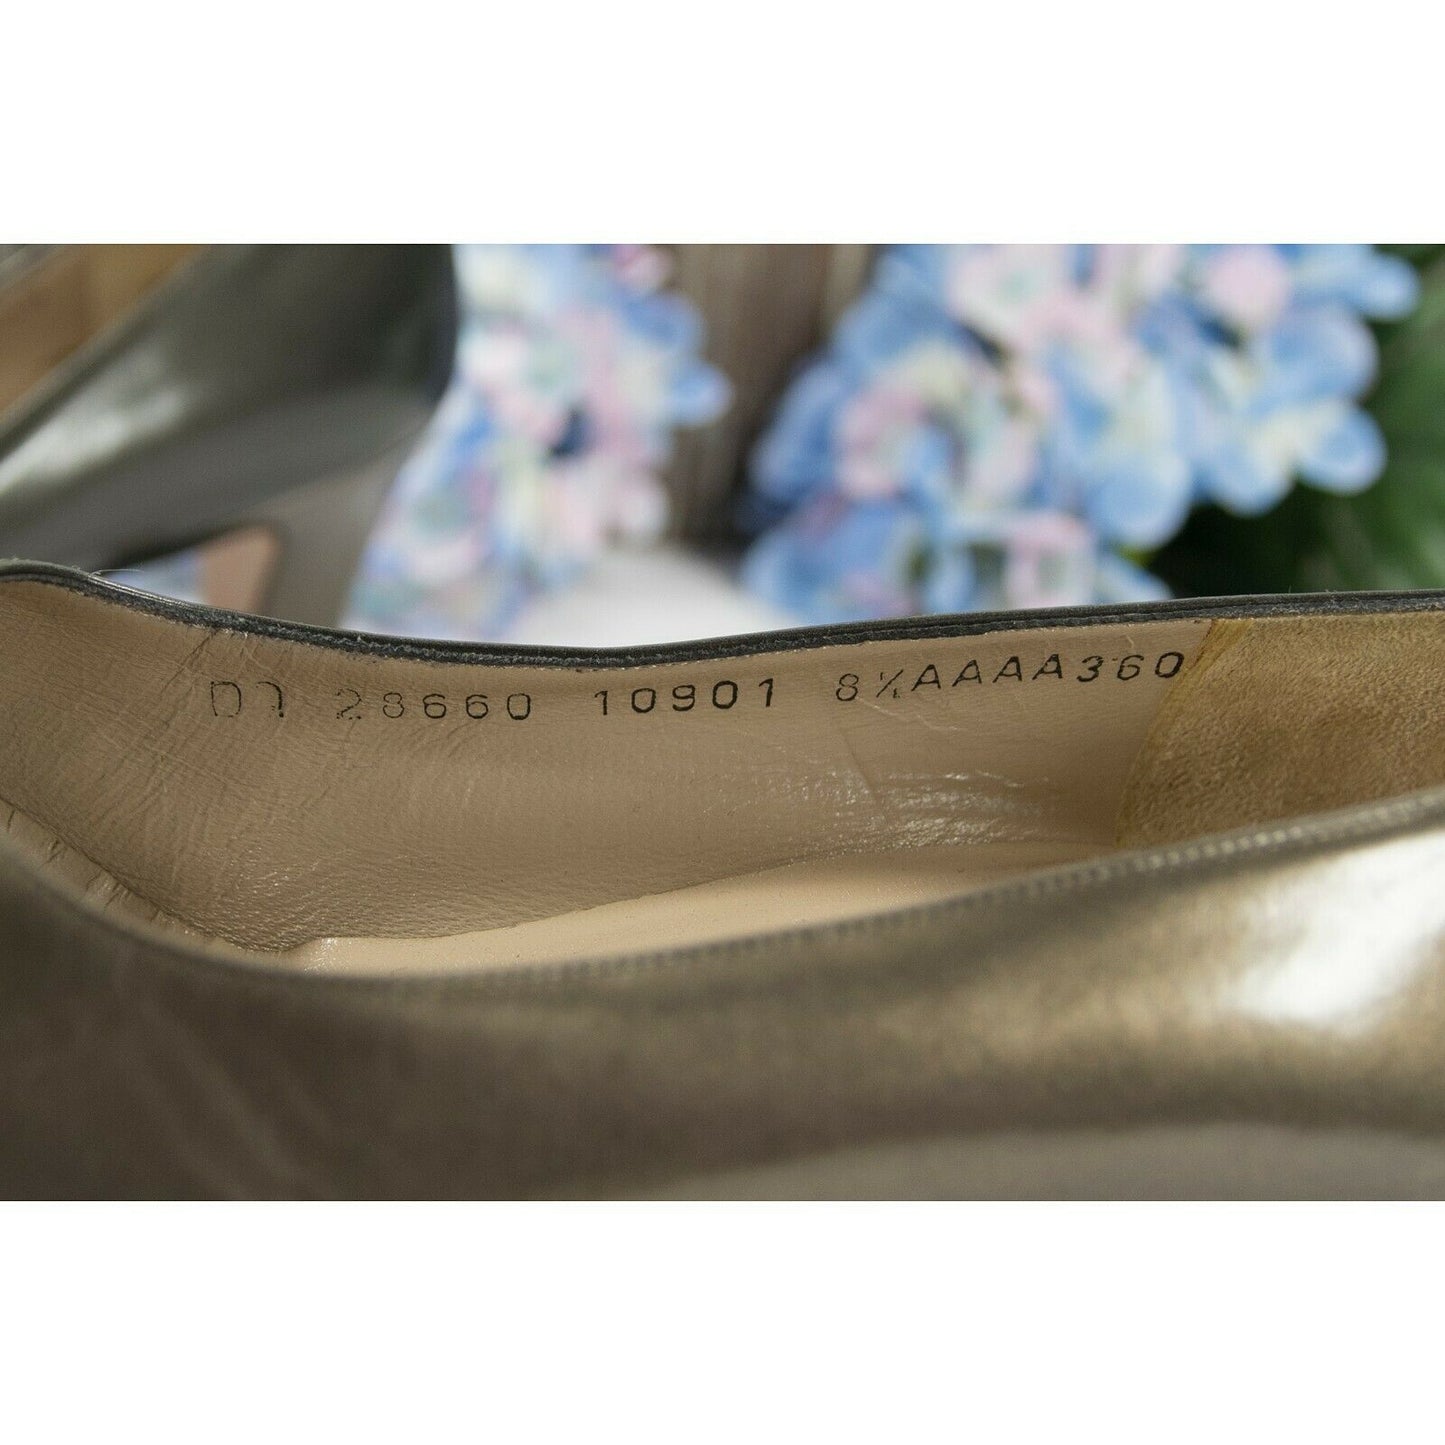 Salvatore Ferragamo DQ28660 Bronze Leather Low Heels Shoes Size 8.5 Extra Narrow